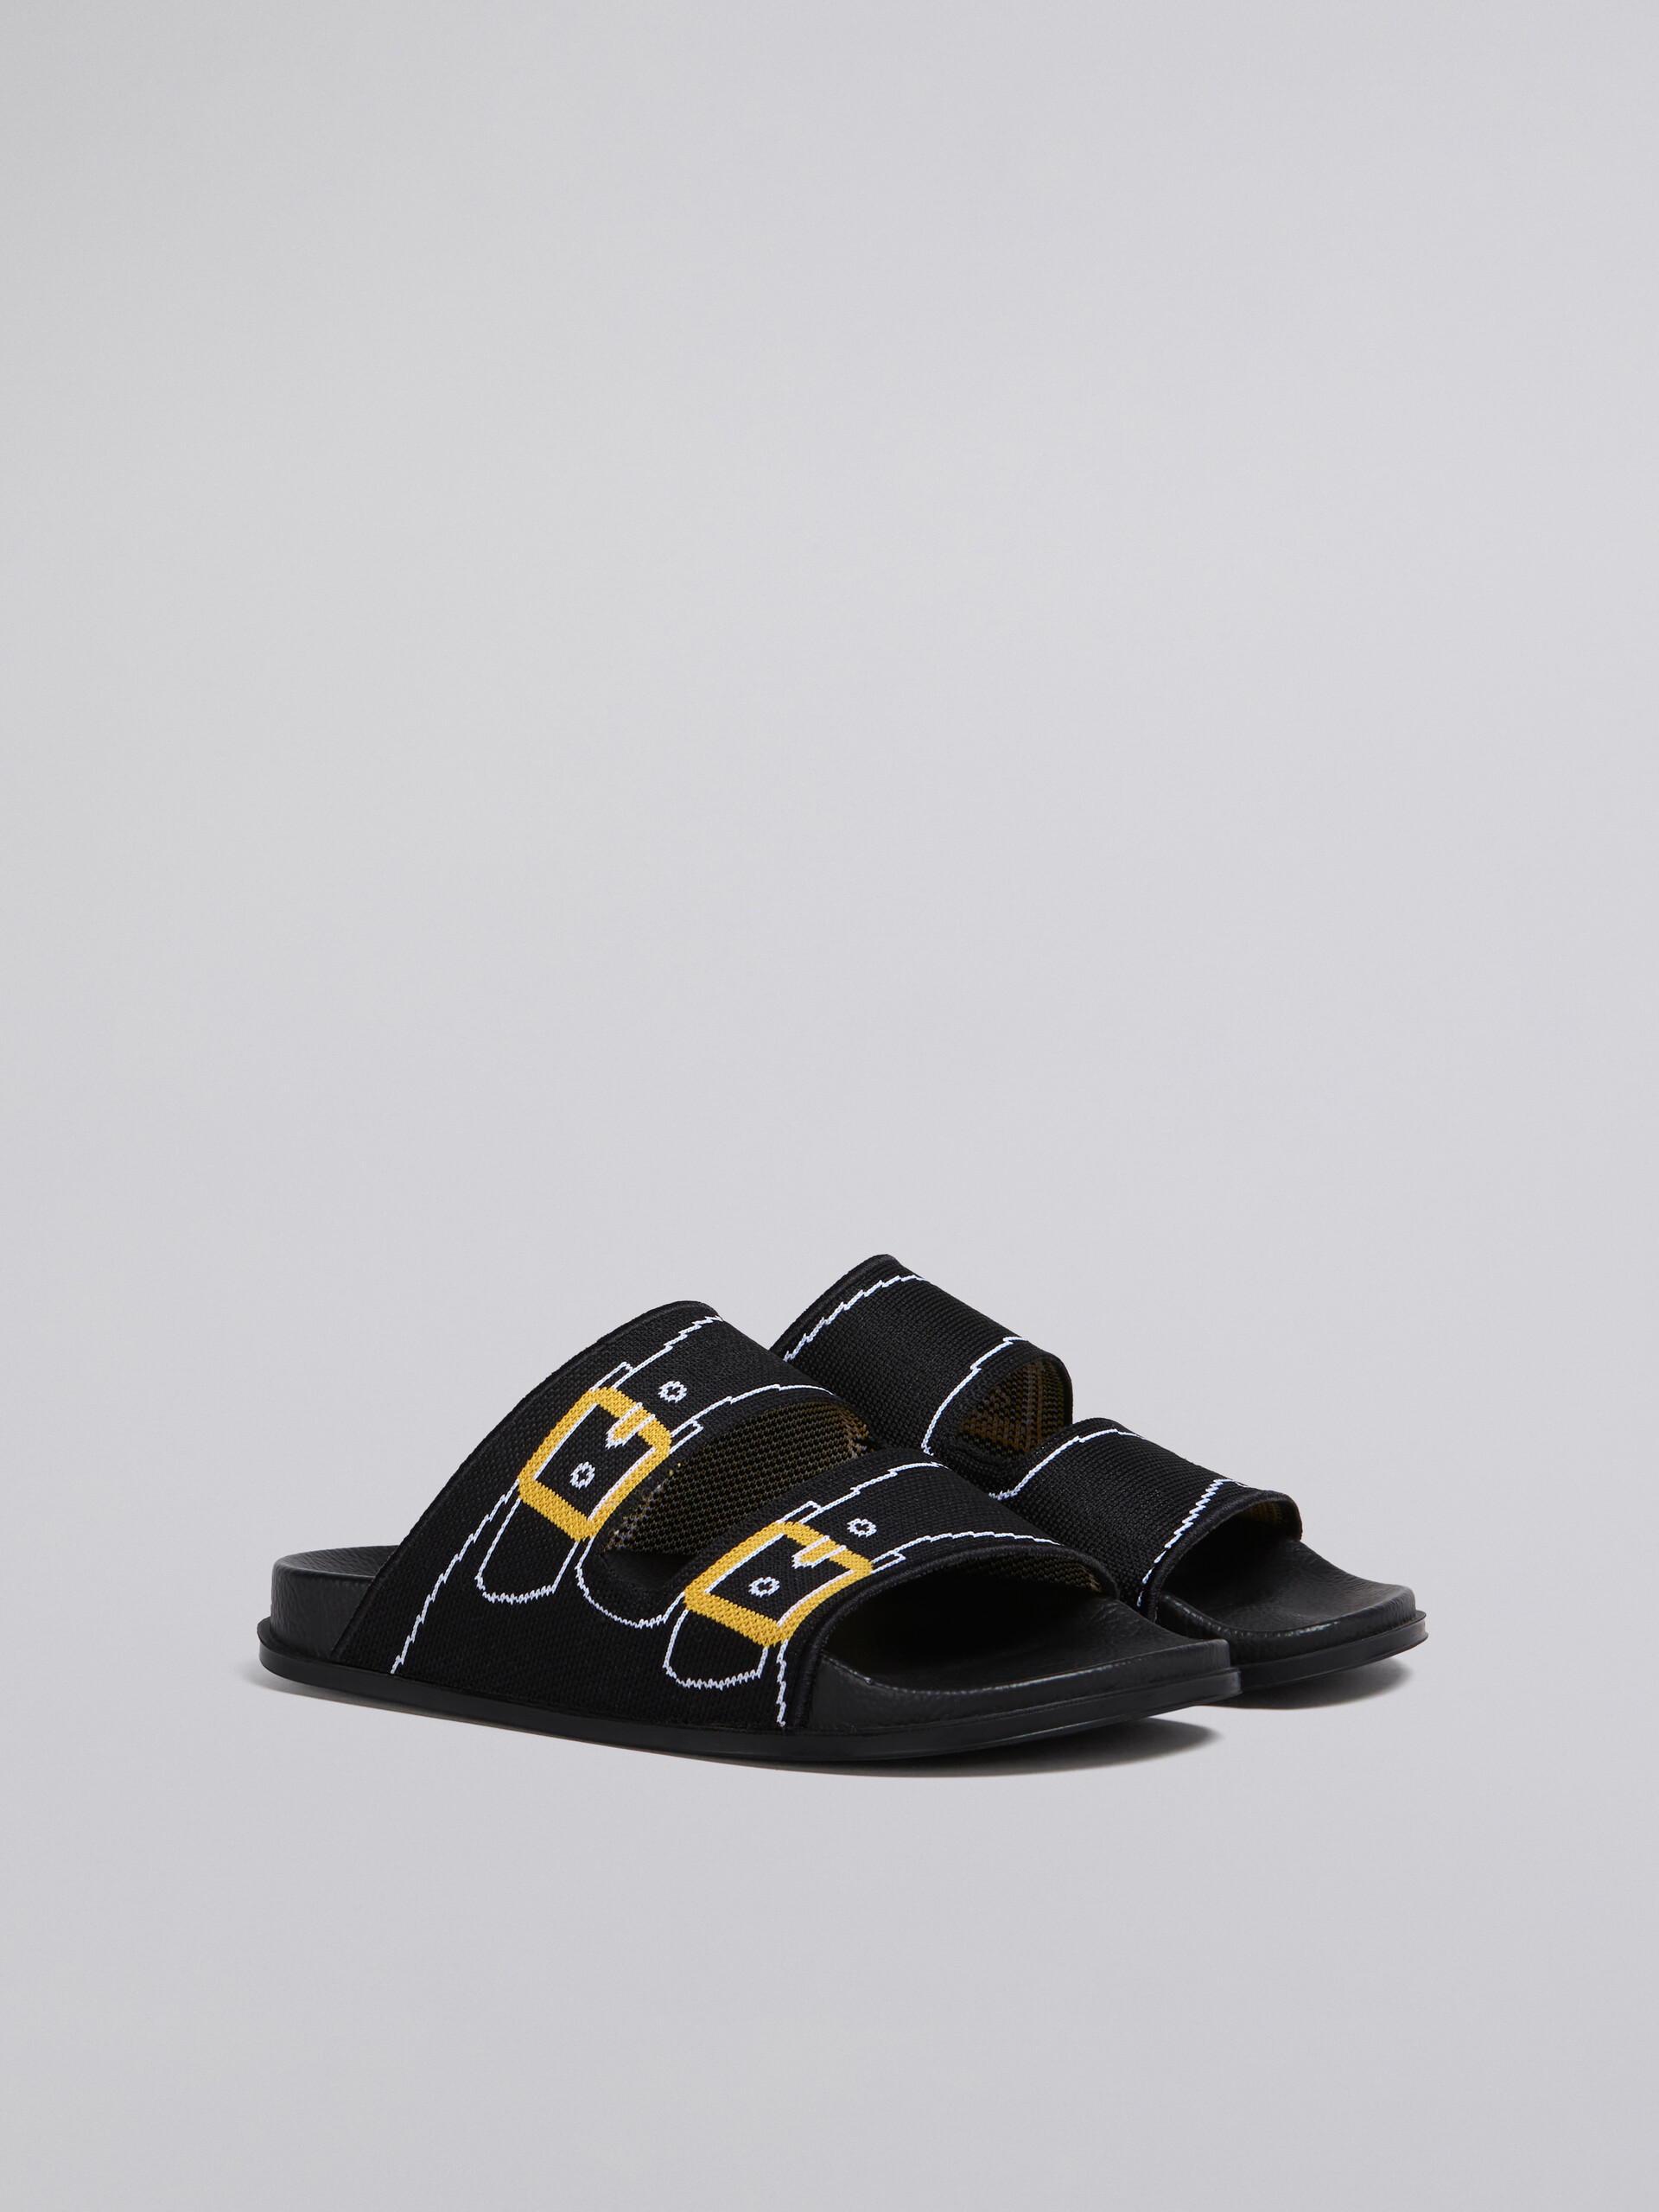 Black trompe l'œil jacquard two-strap slide - Sandals - Image 2